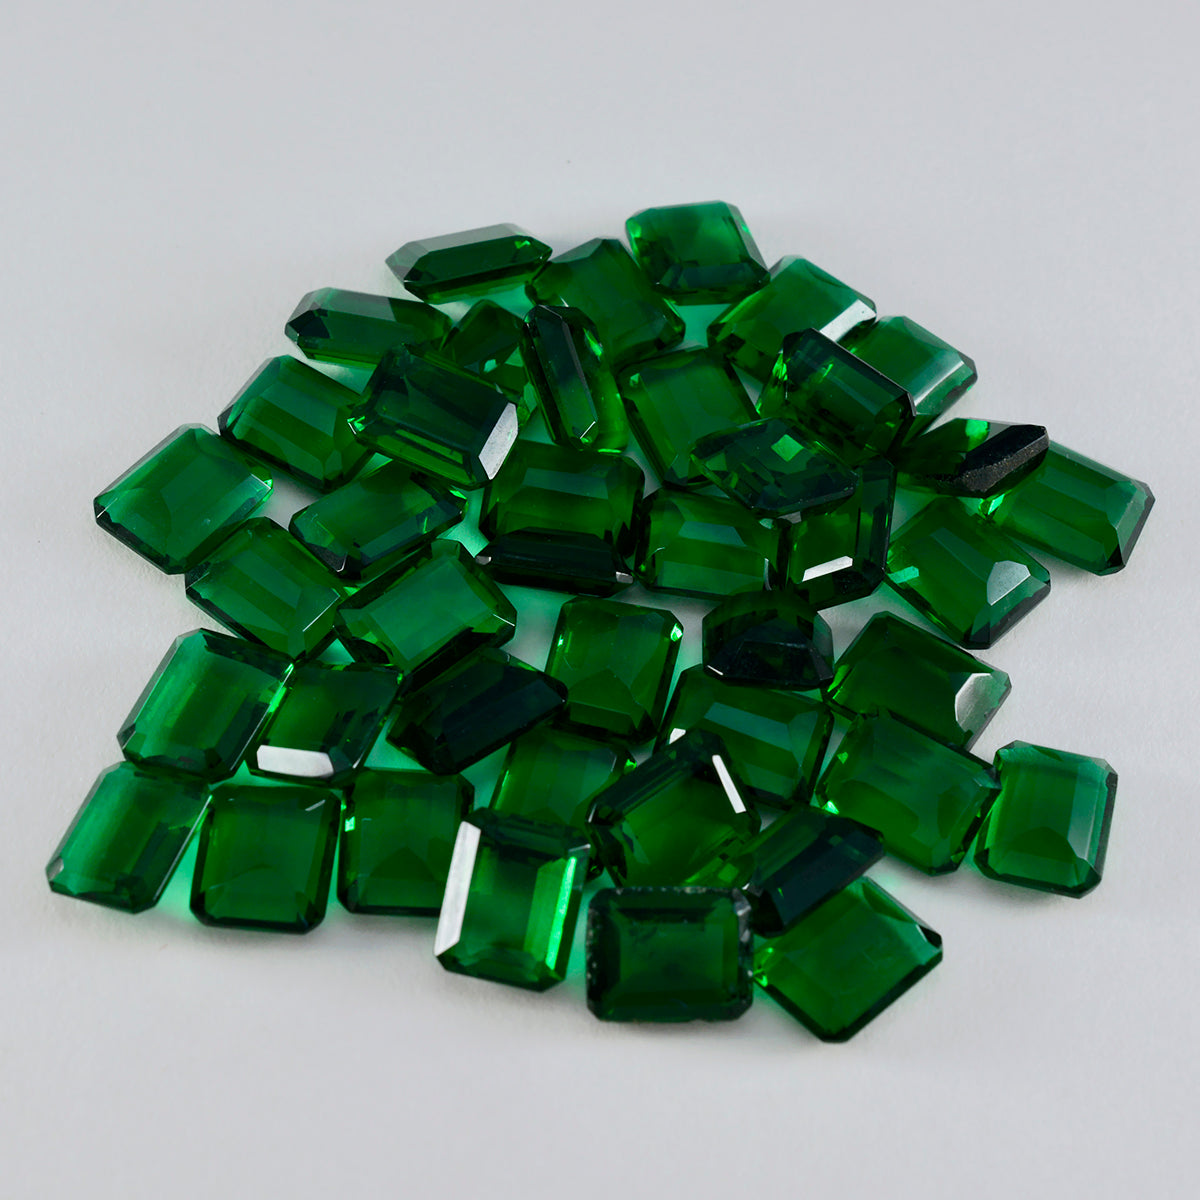 riyogems 1 st grön smaragd cz fasetterad 6x8 mm oktagon form fin kvalitet lös ädelsten